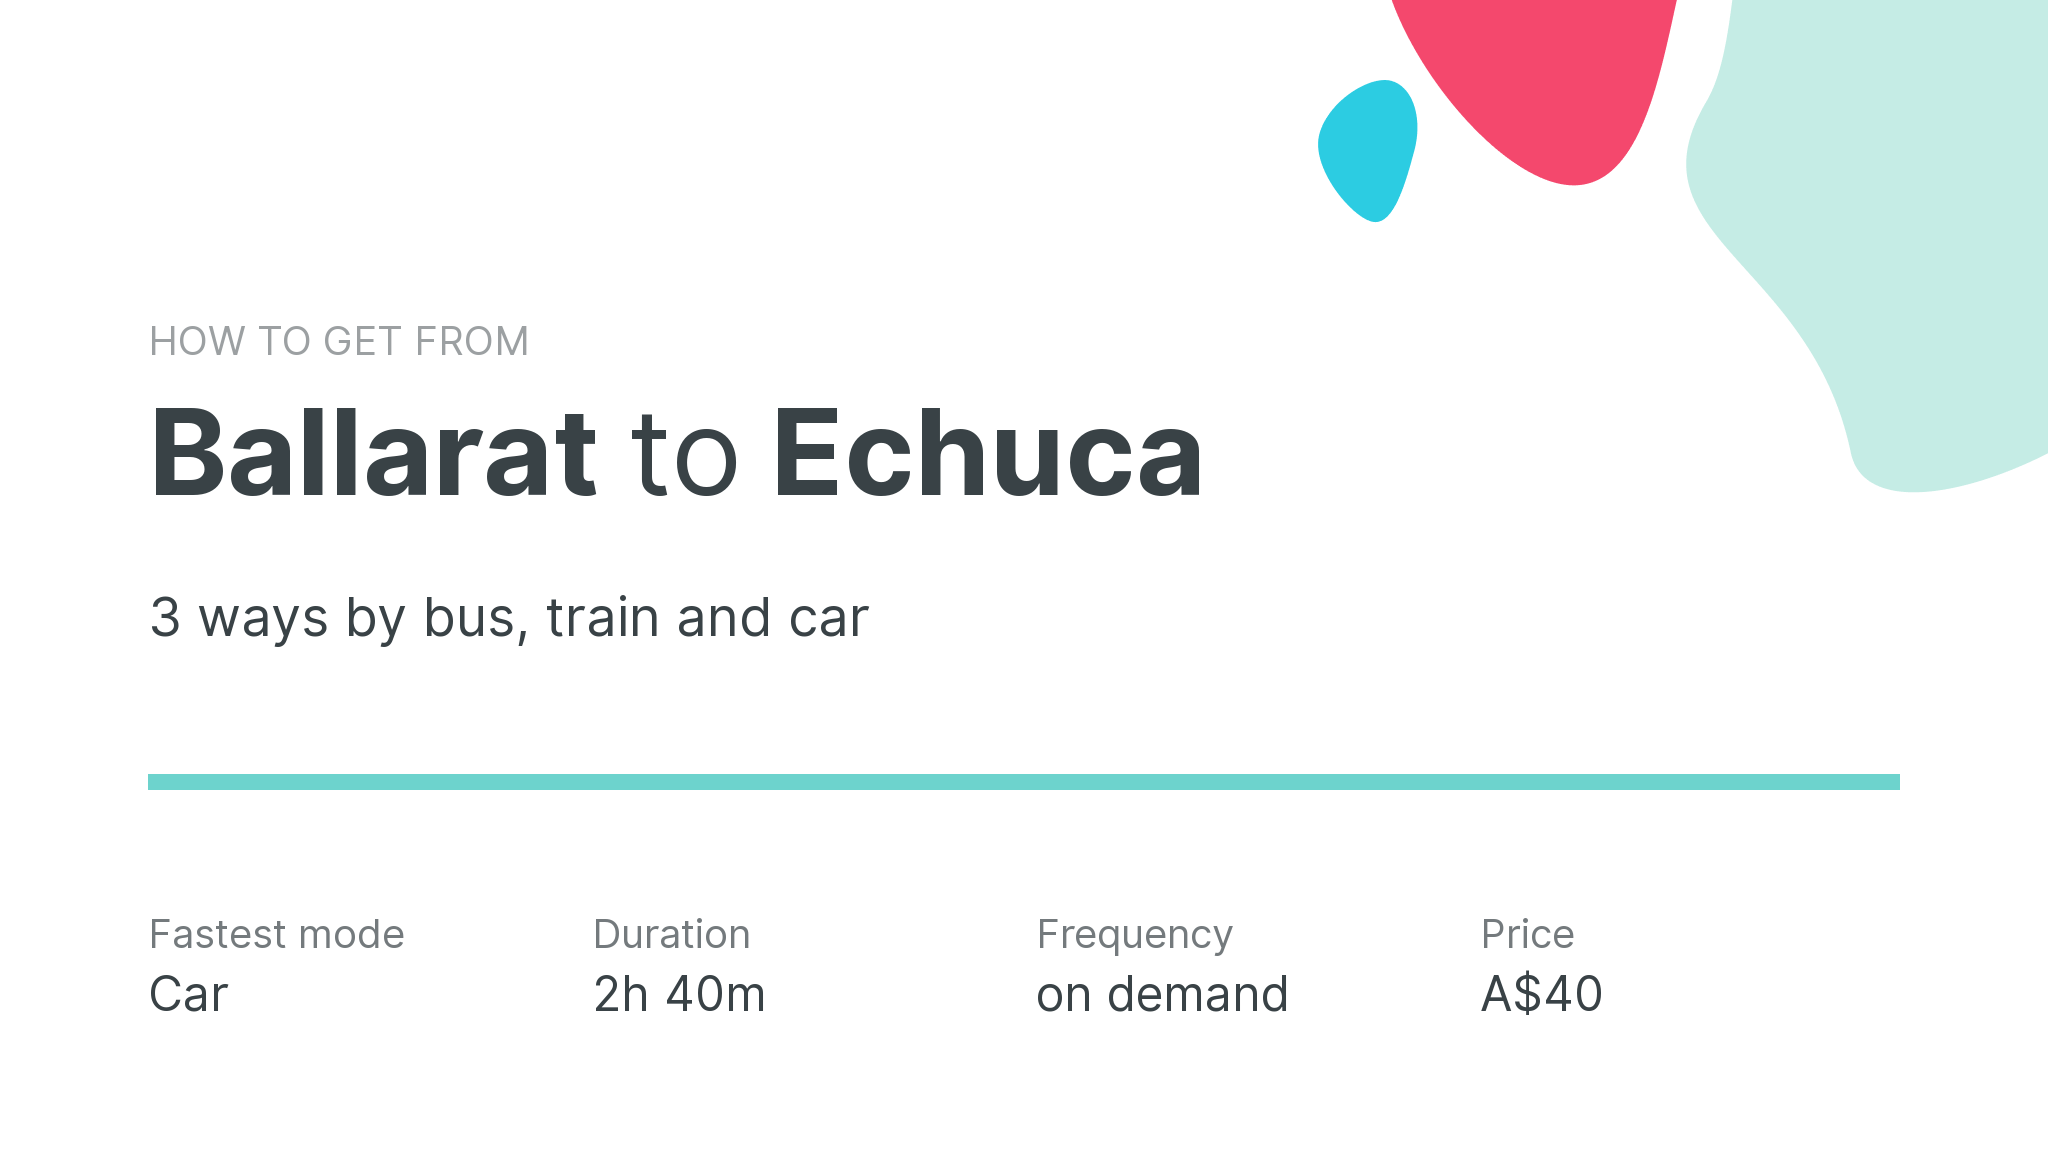 How do I get from Ballarat to Echuca